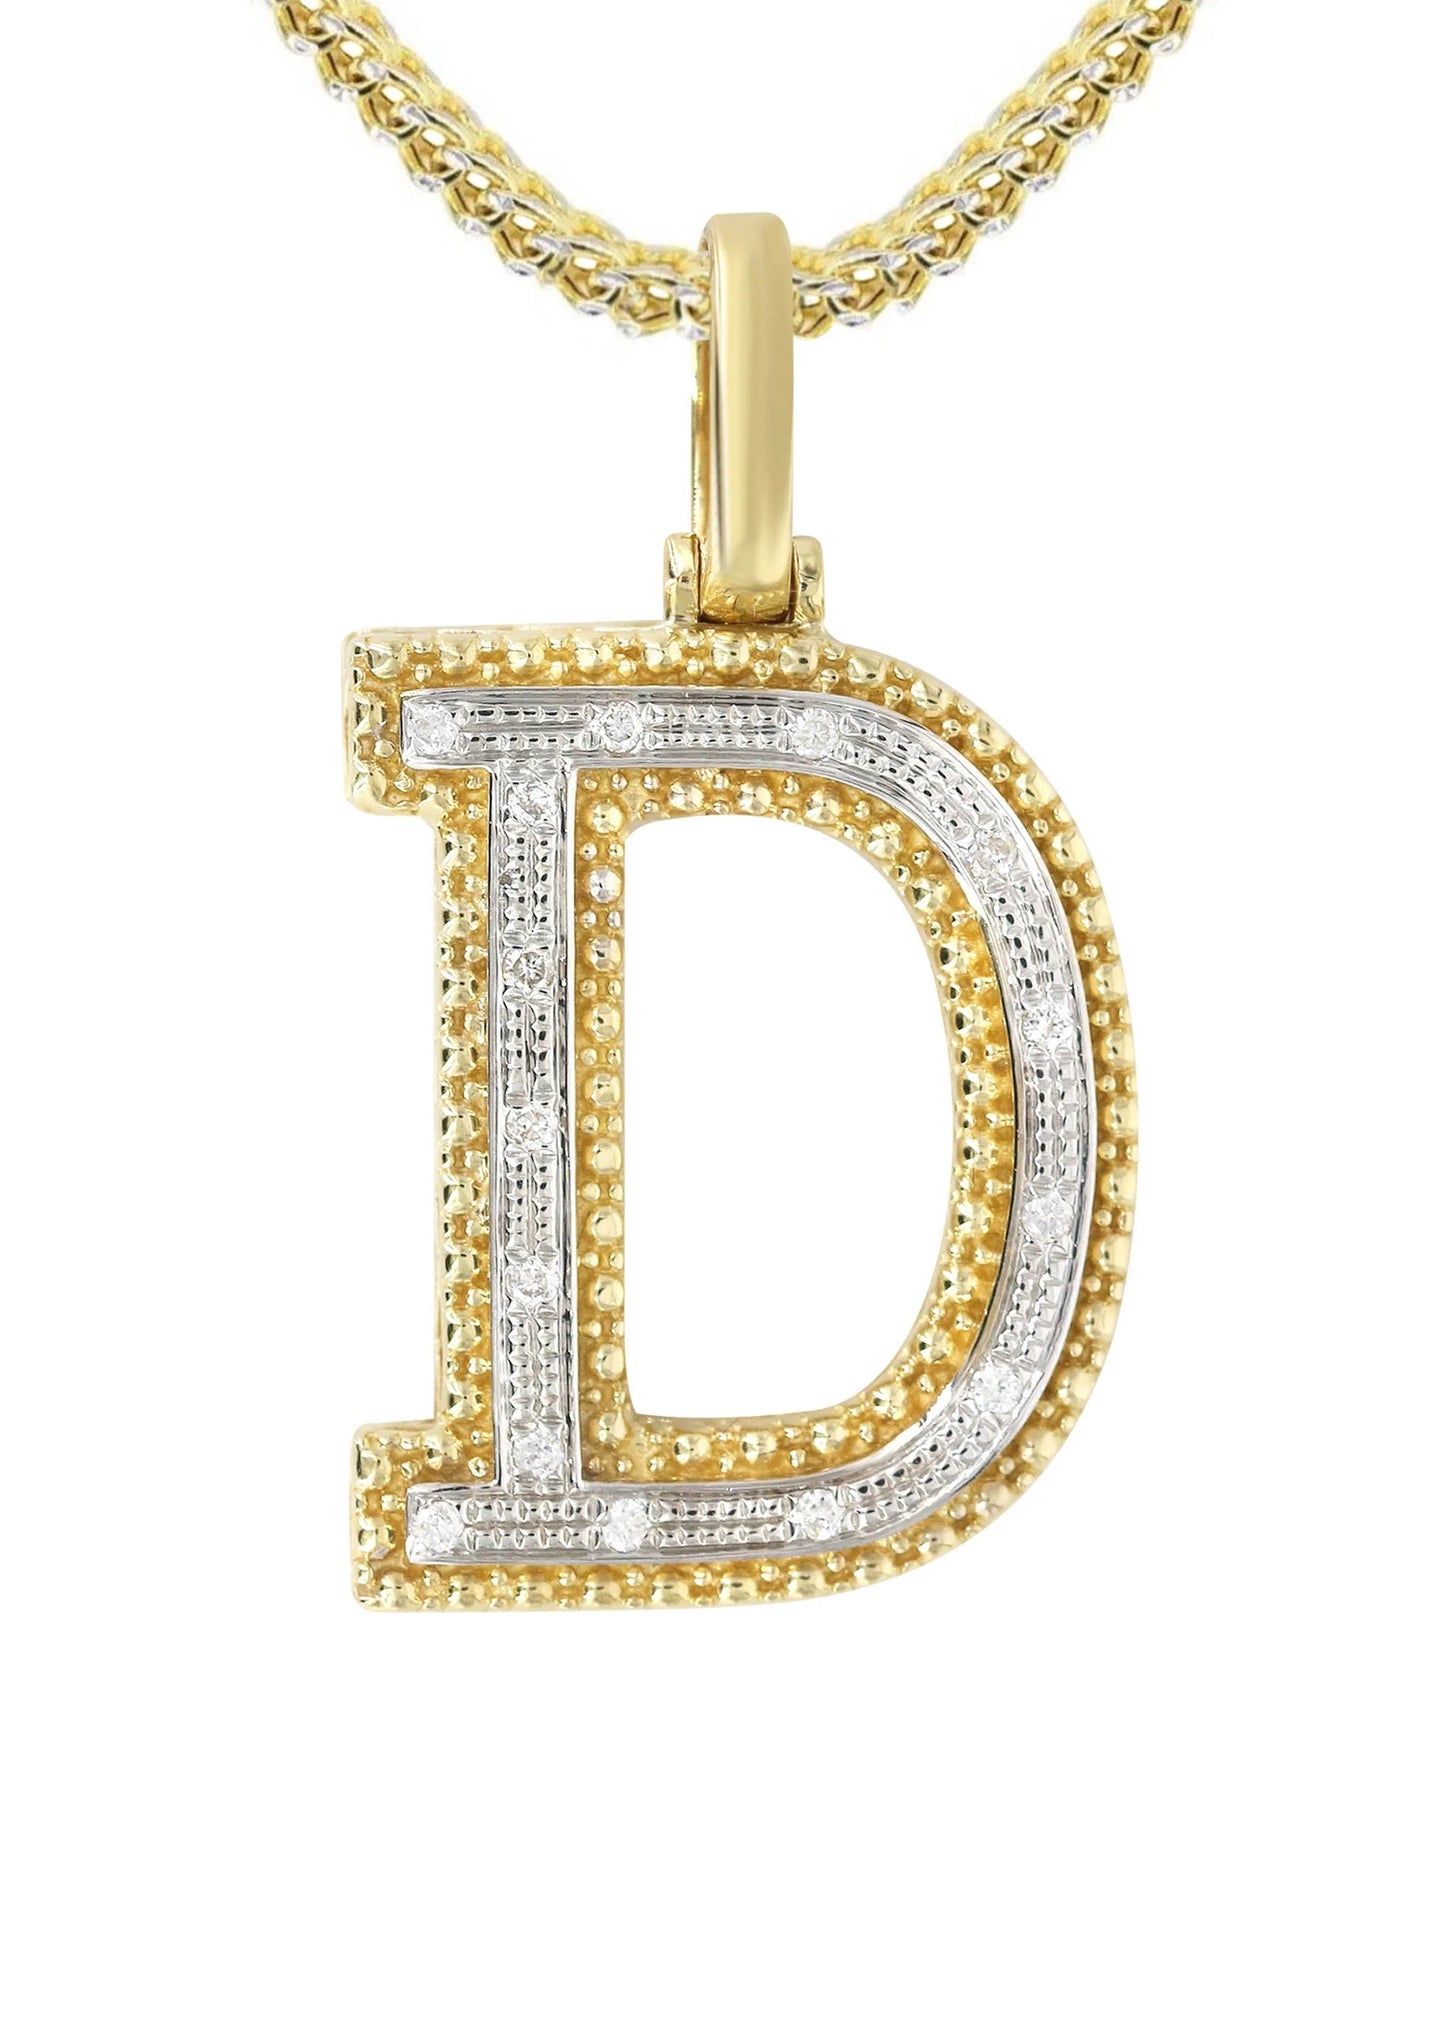 10k Yellow Gold Diamond Pendant Letter "D"